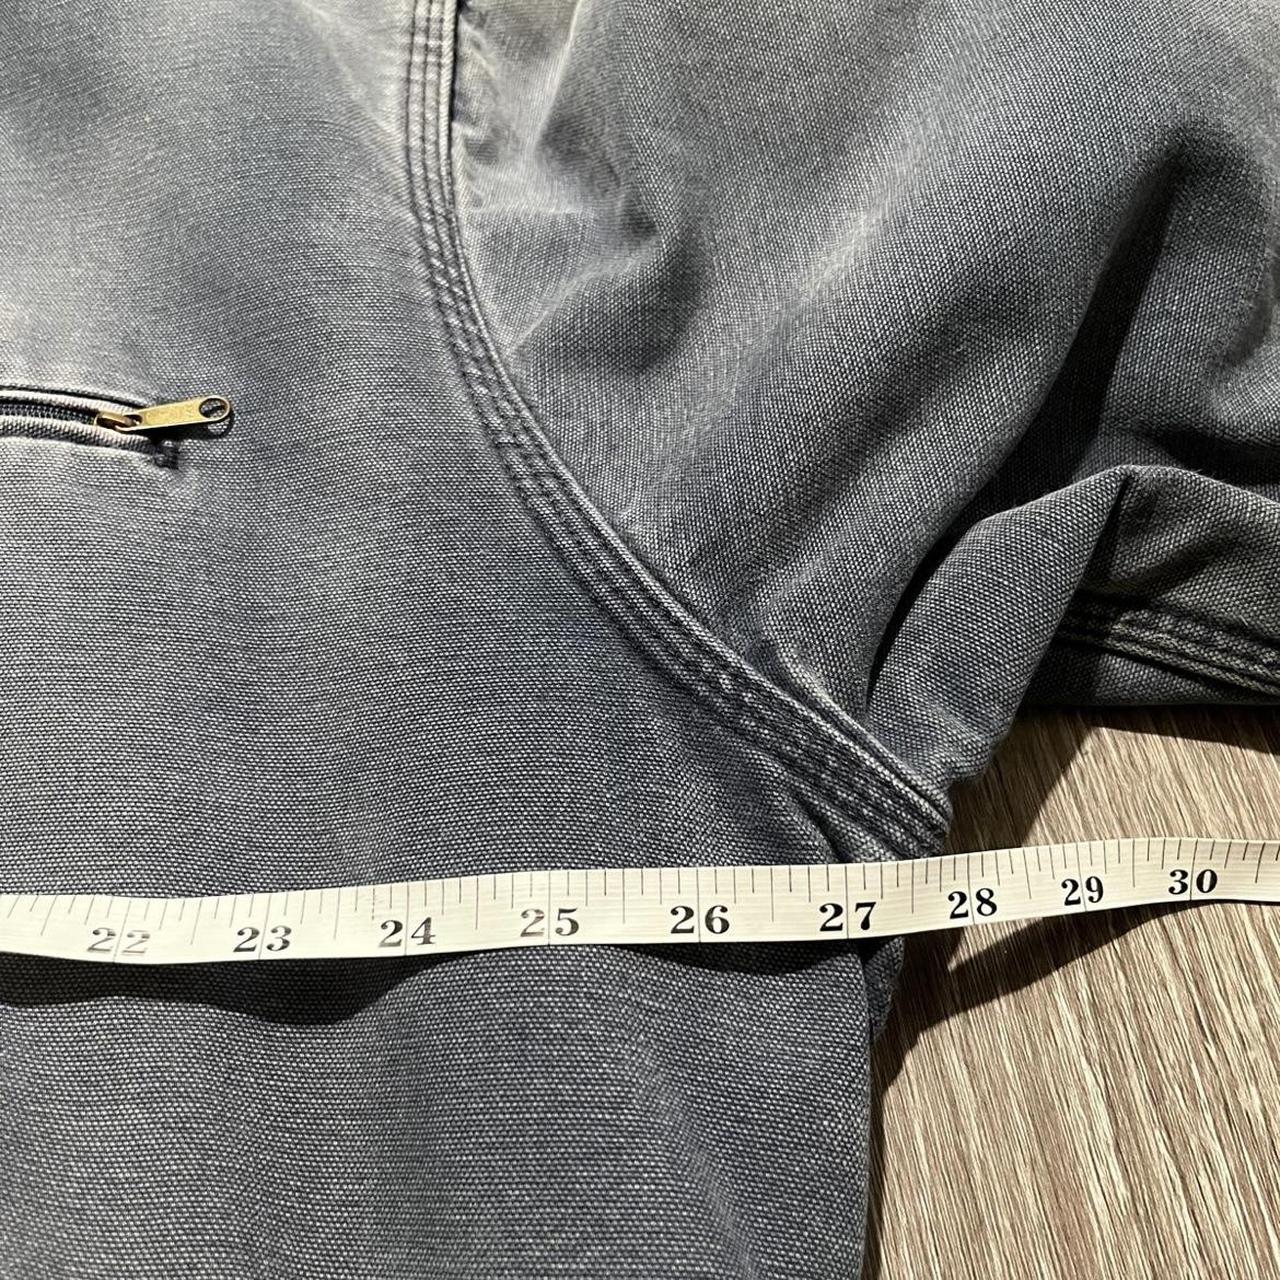 How to repair a zipper on a Carhartt coat  Repair clothes, Sew zipper,  Carhartt coat